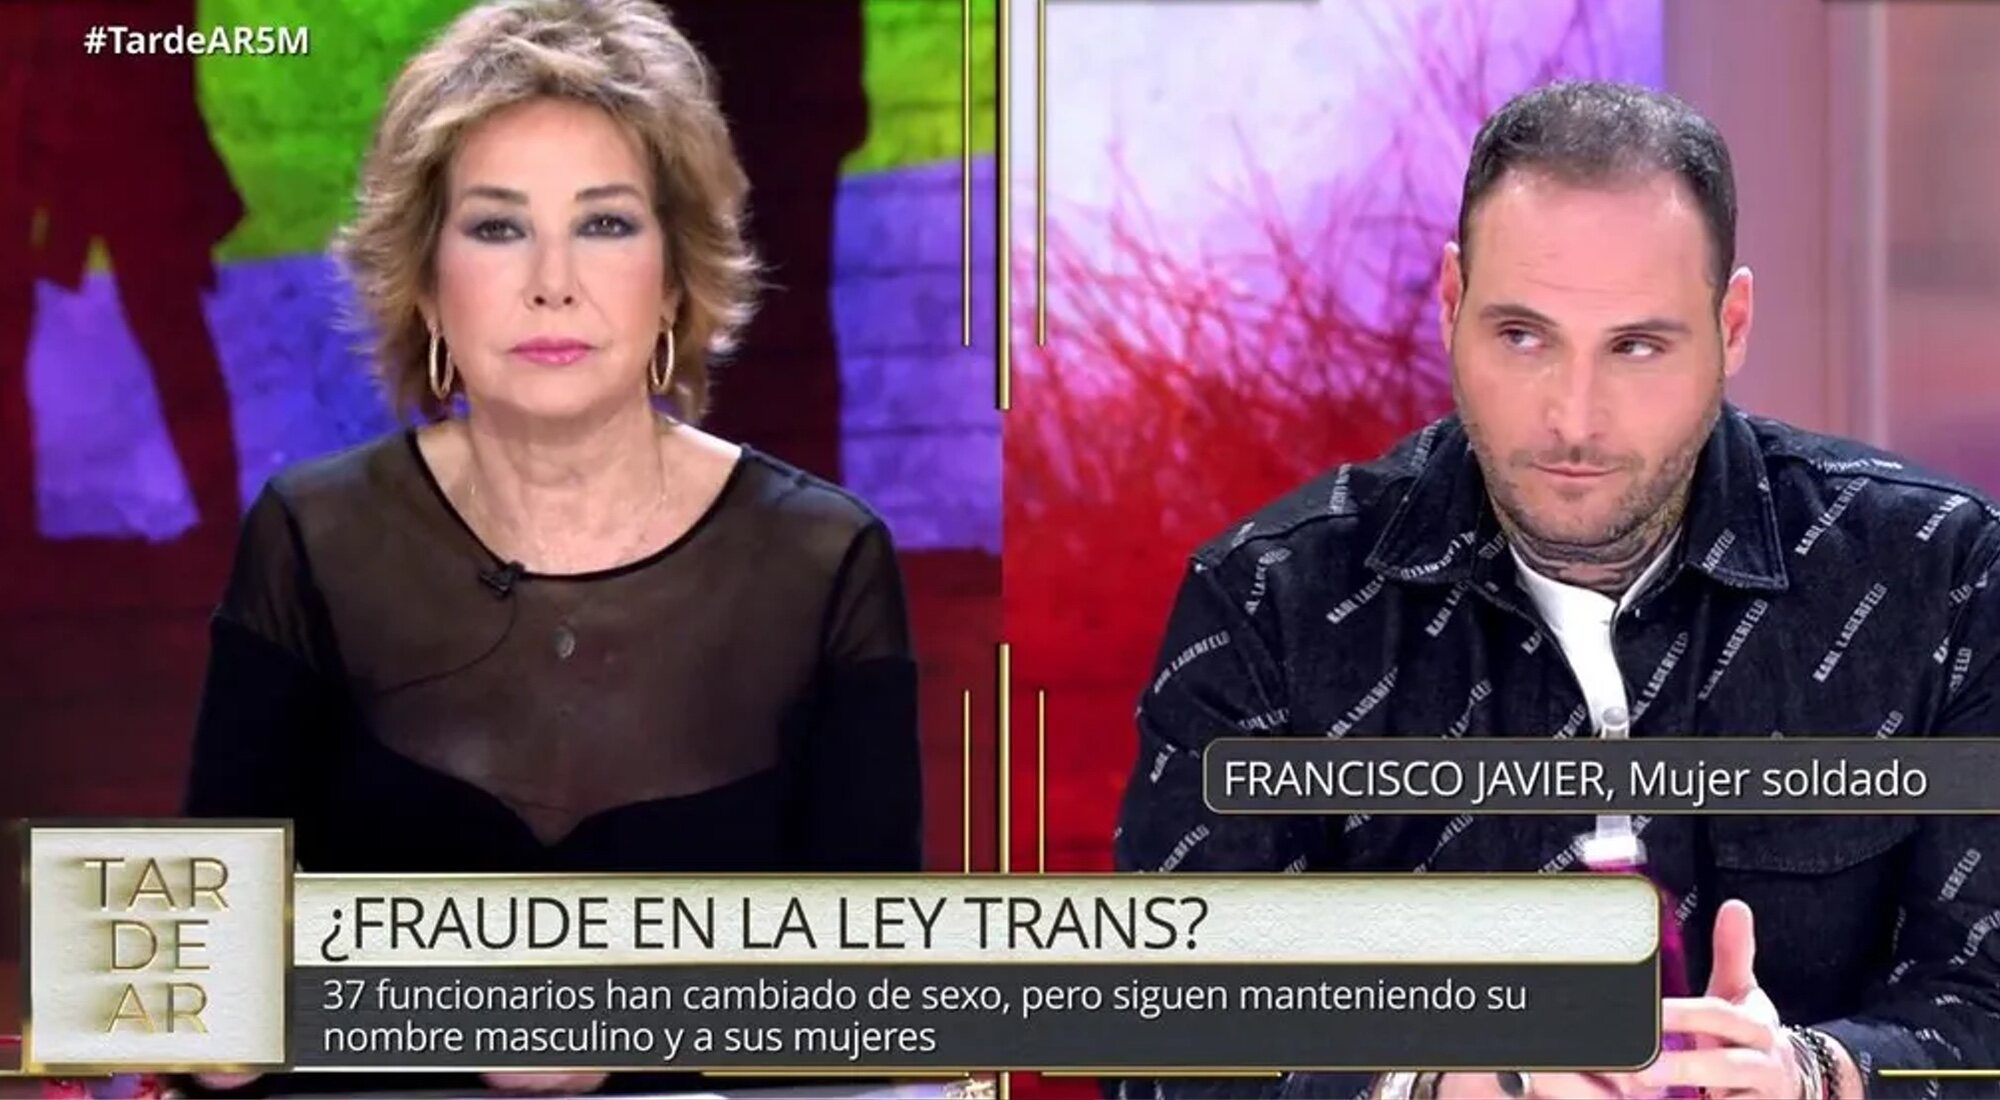 Ana Rosa Quintana entrevista en 'TardeAR' al militar Franscico Javier